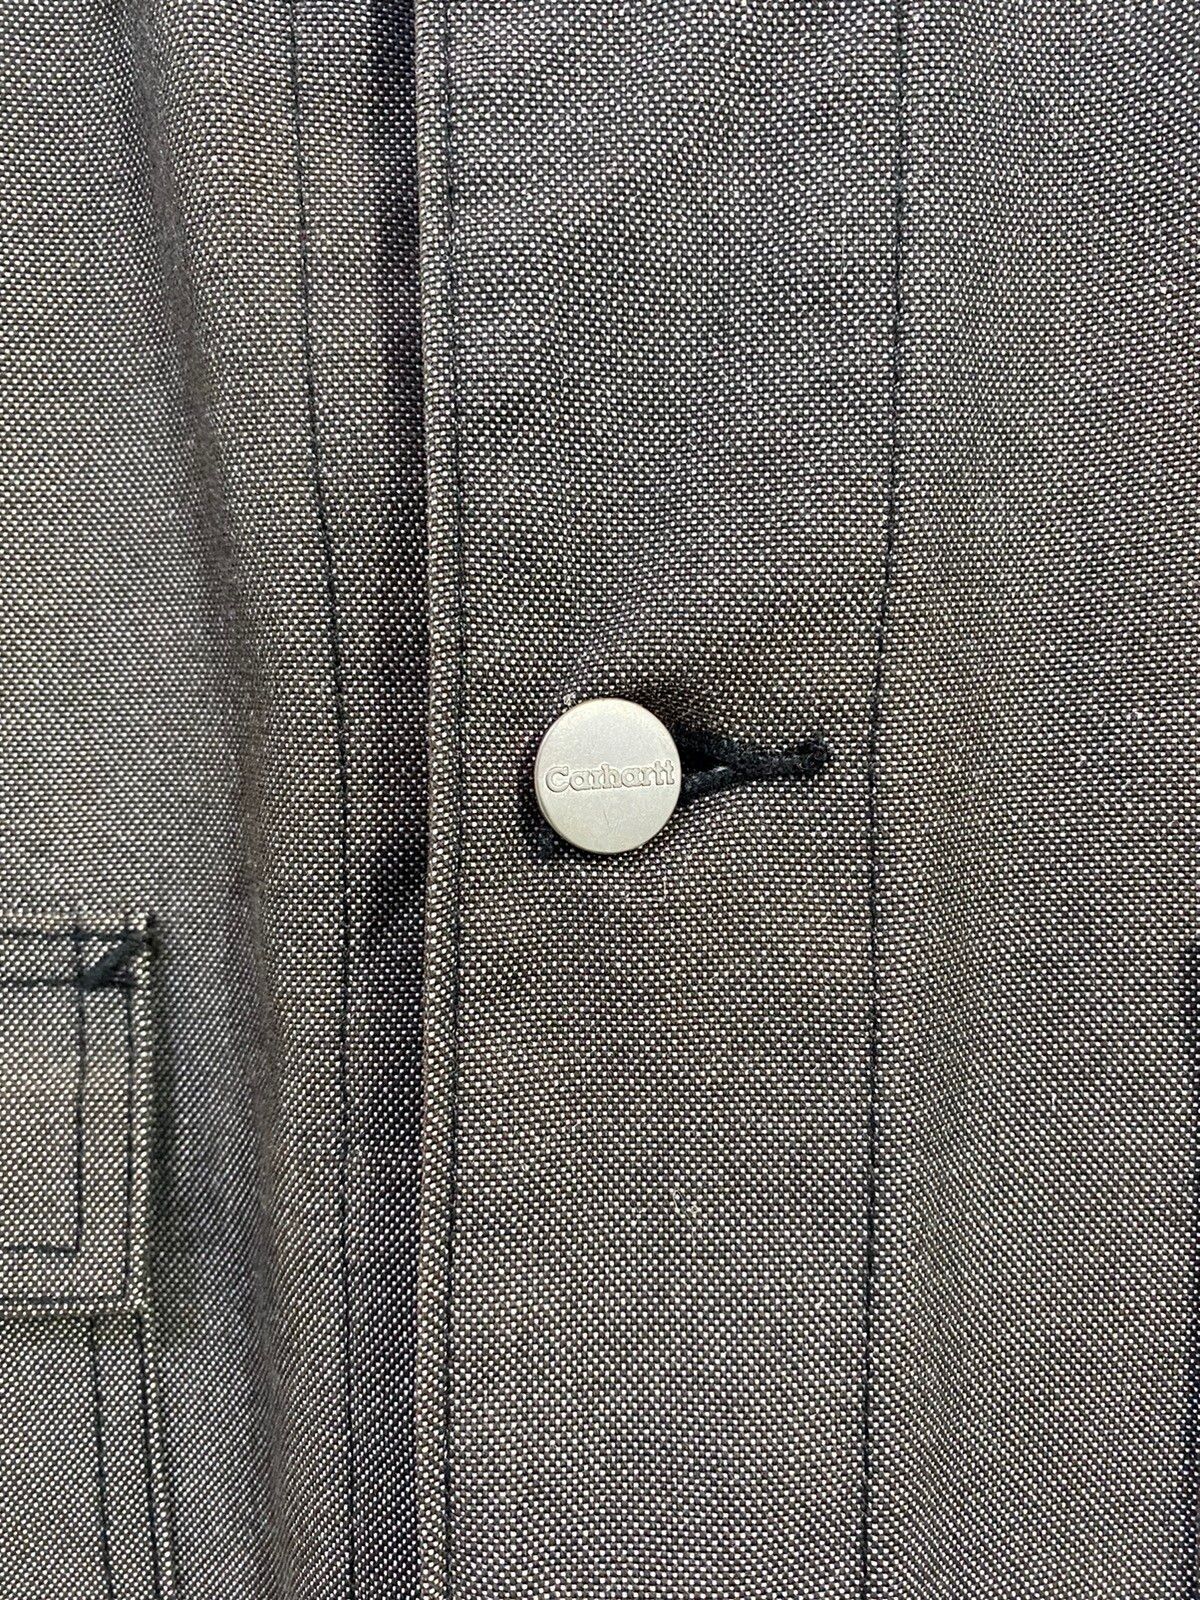 Carhartt Chore Jacket 4 Pocket Design Rare Design - 6